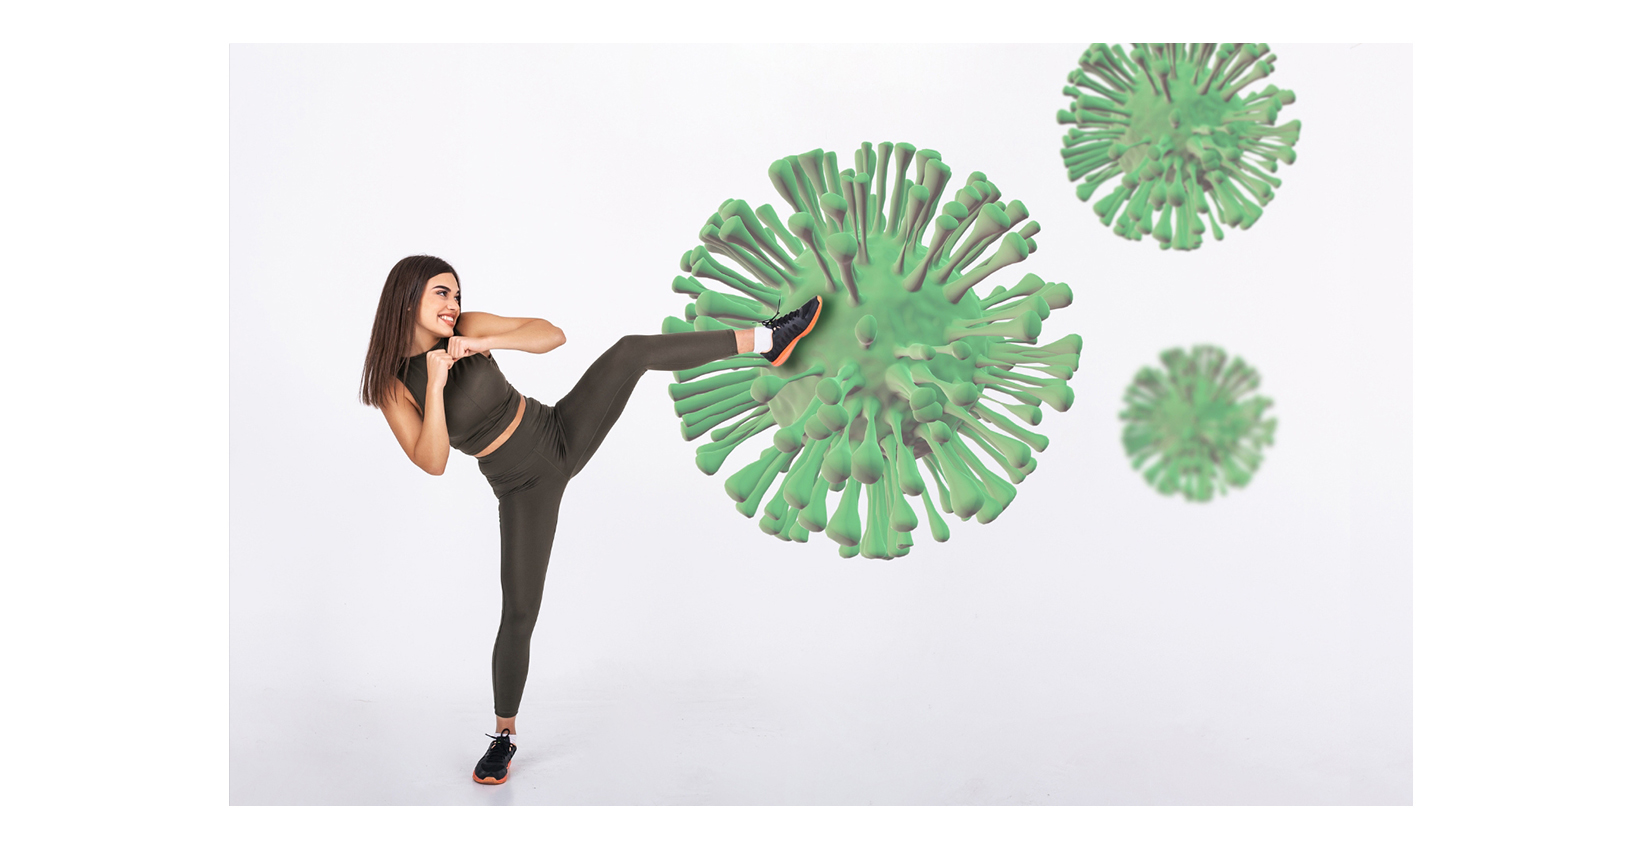 A woman kicking a large representation of a virus